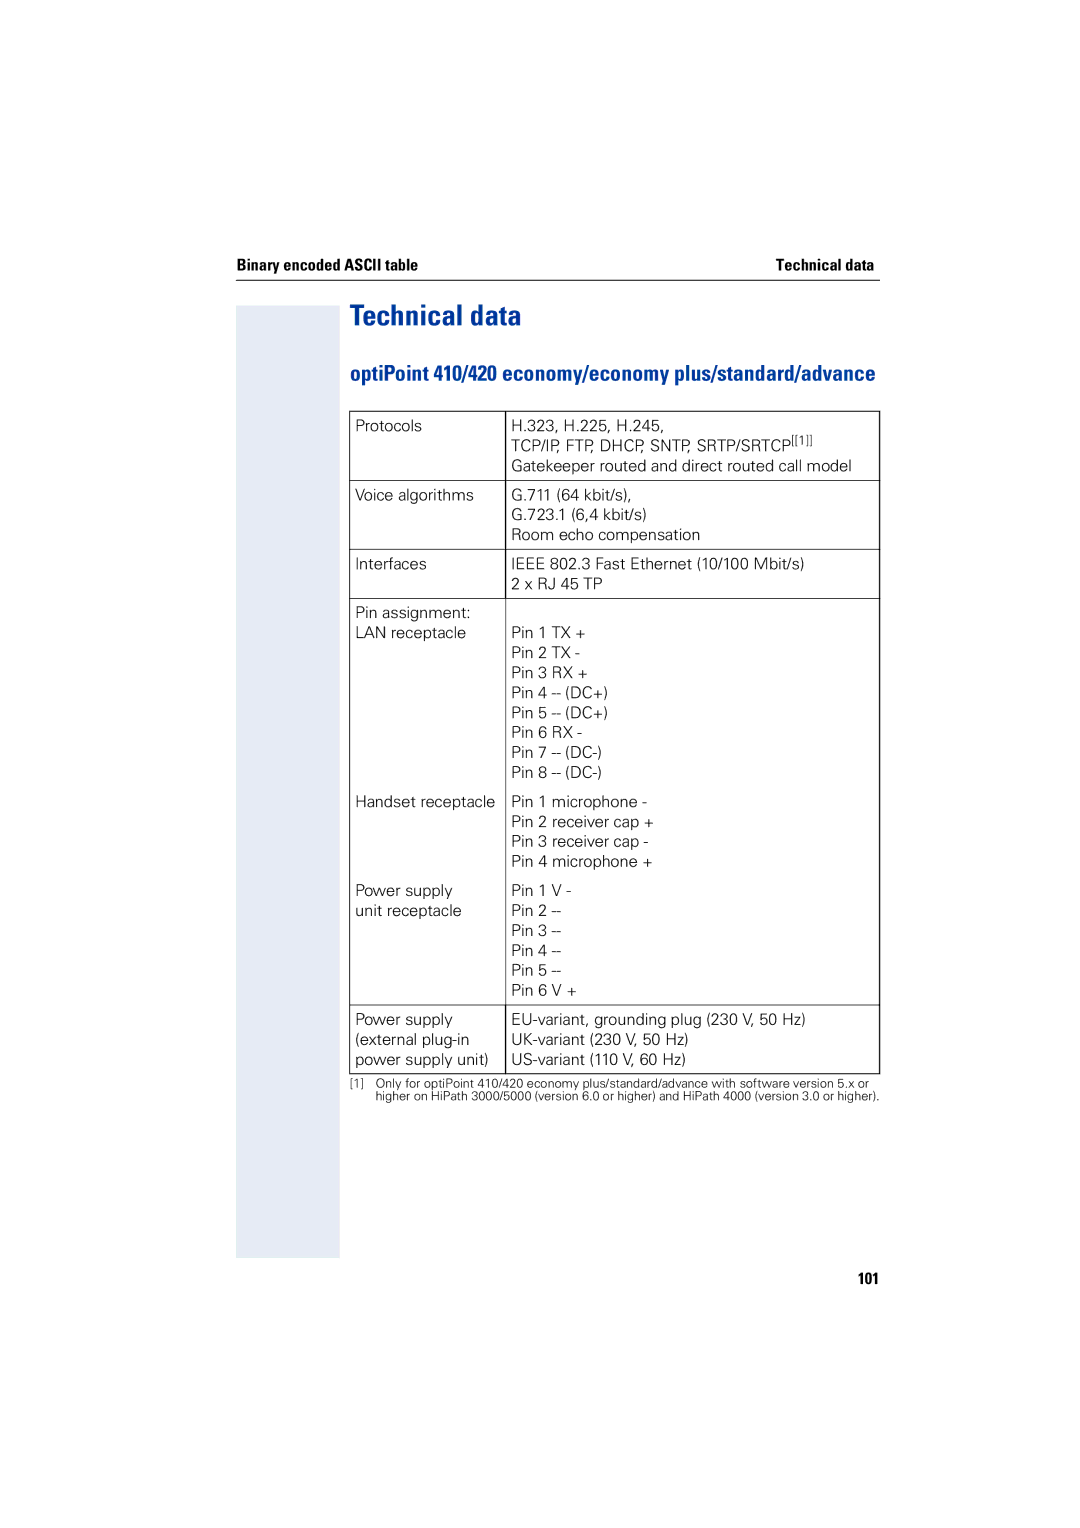 Siemens 2000 manual Technical data, Binary encoded Ascii table, 101 